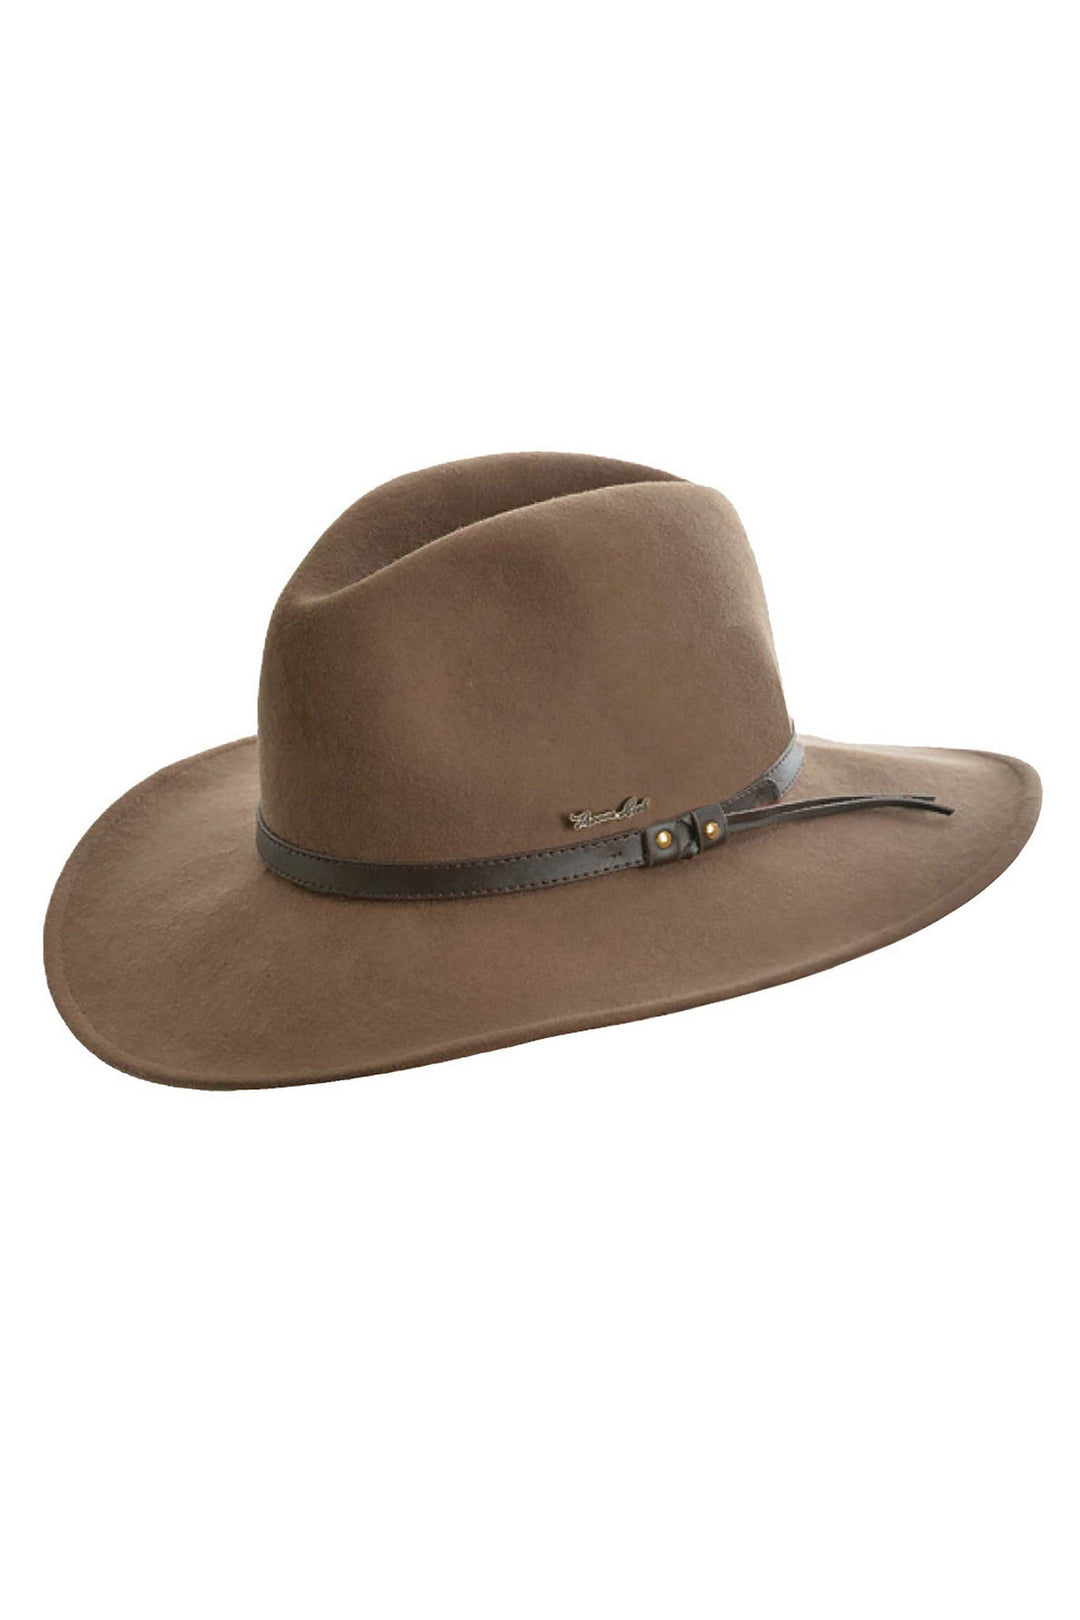 Thomas Cook Hats Thomas Cook Hat Original Crushable